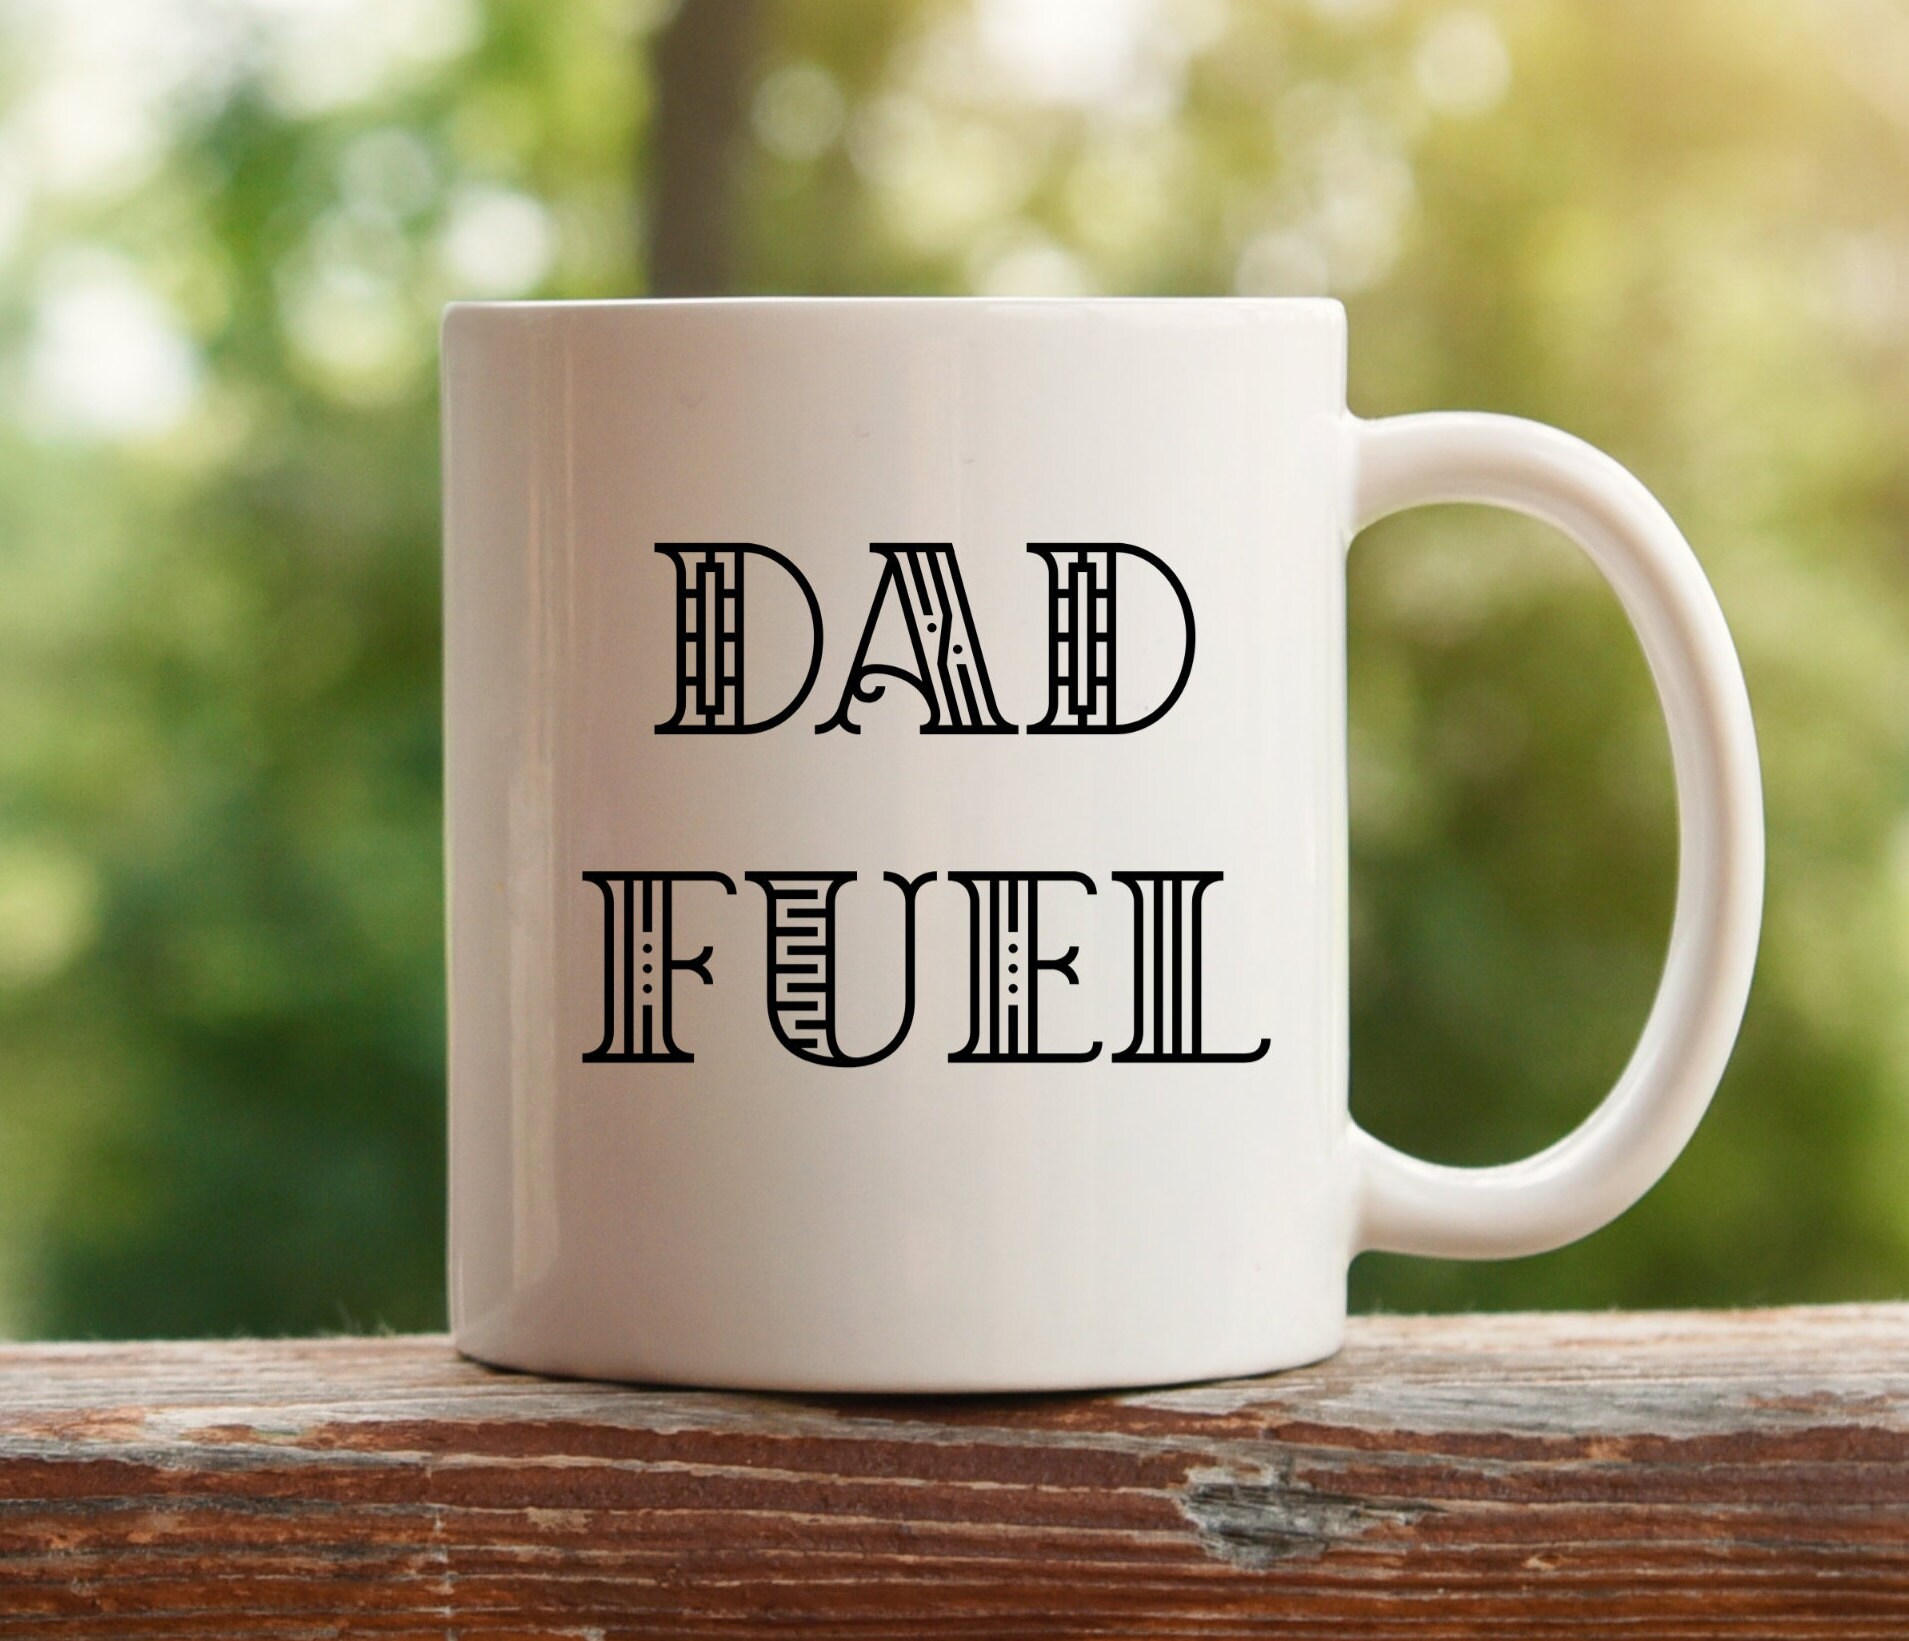 New Mom & New Dad Fuel Mugs